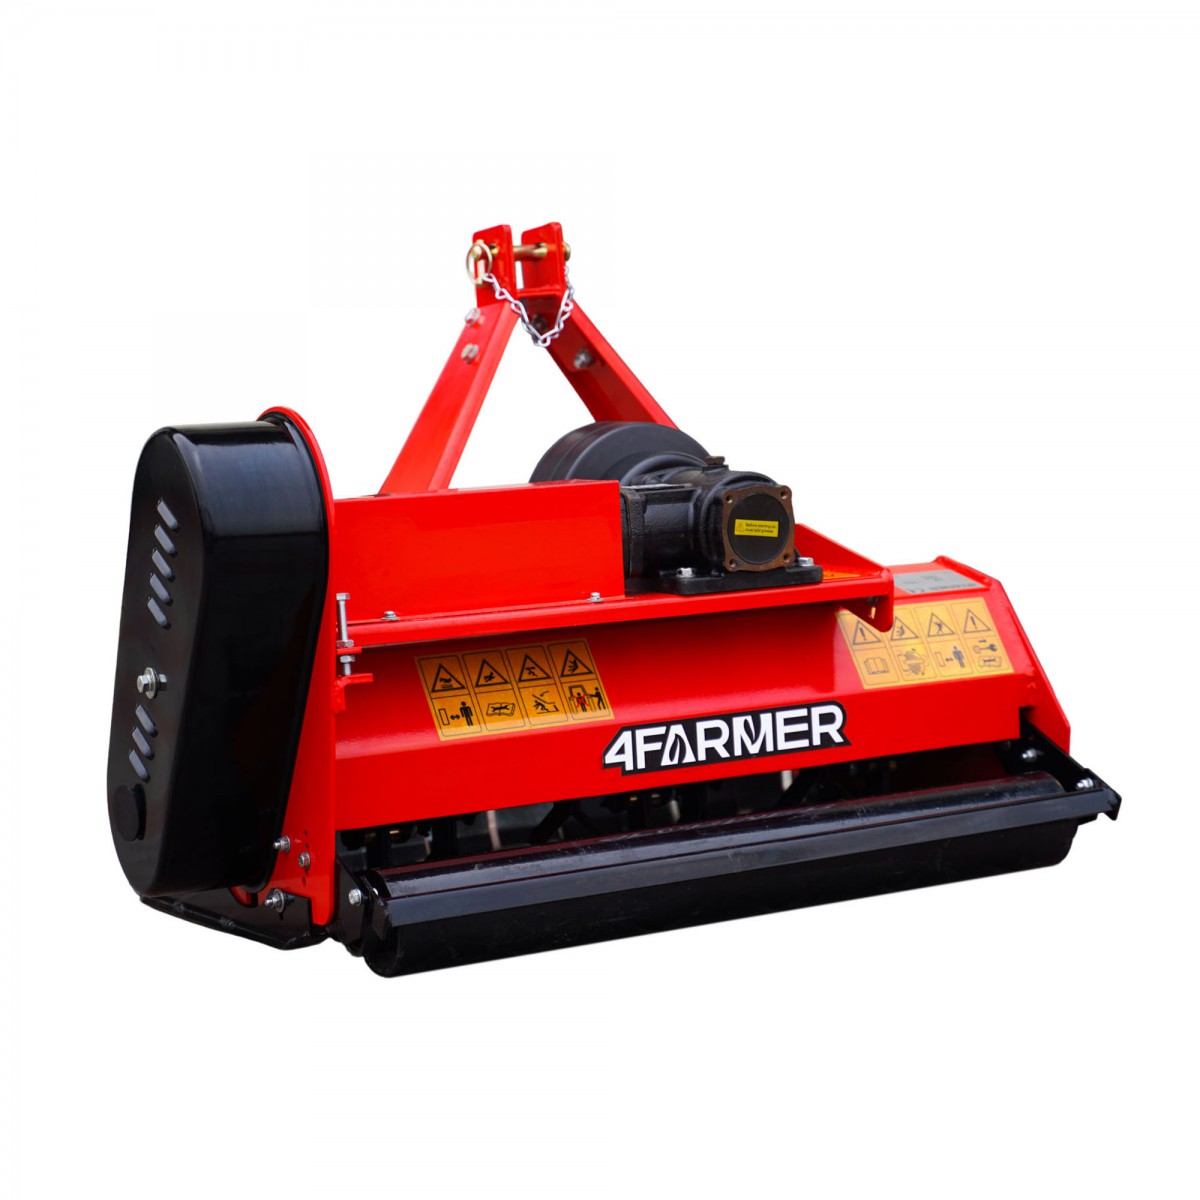 Flail mower EF 85 4FARMER - red